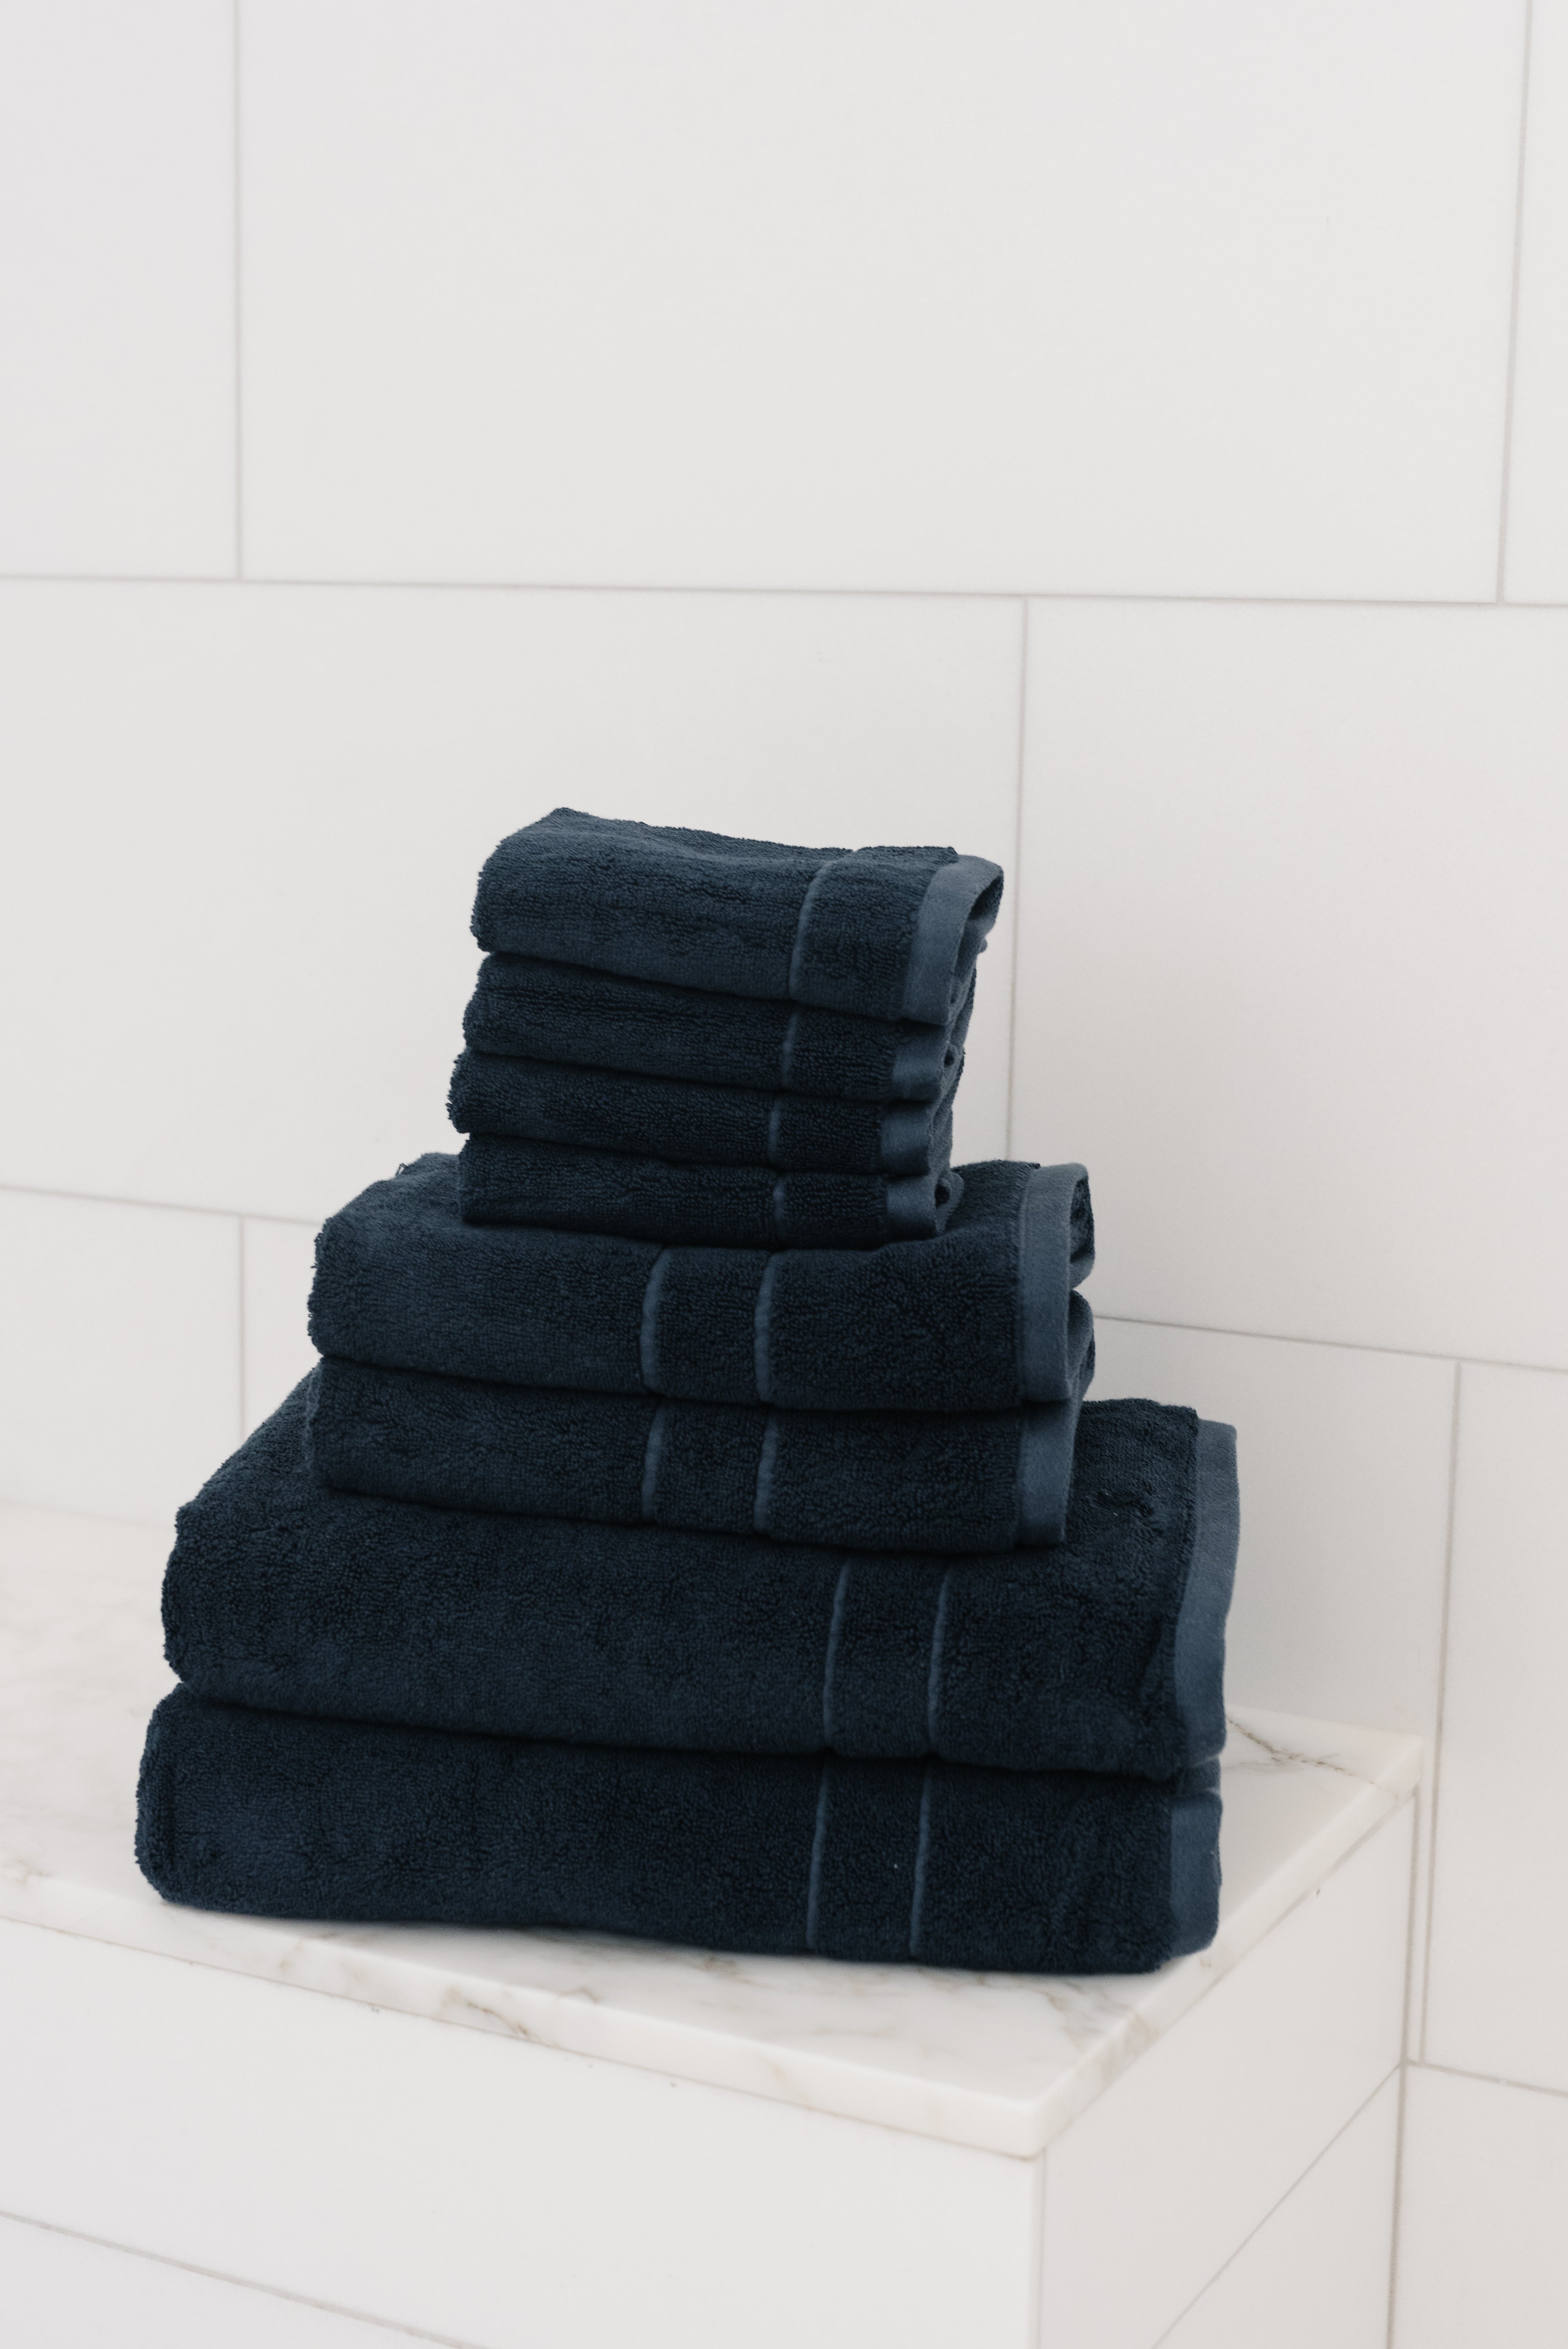 Premium Plush Bath Towel Set in the color Dusk. Photo of Dusk Premium Plush Bath Towel Set taken in a bathroom featuring white backsplash tile |Color:Dusk